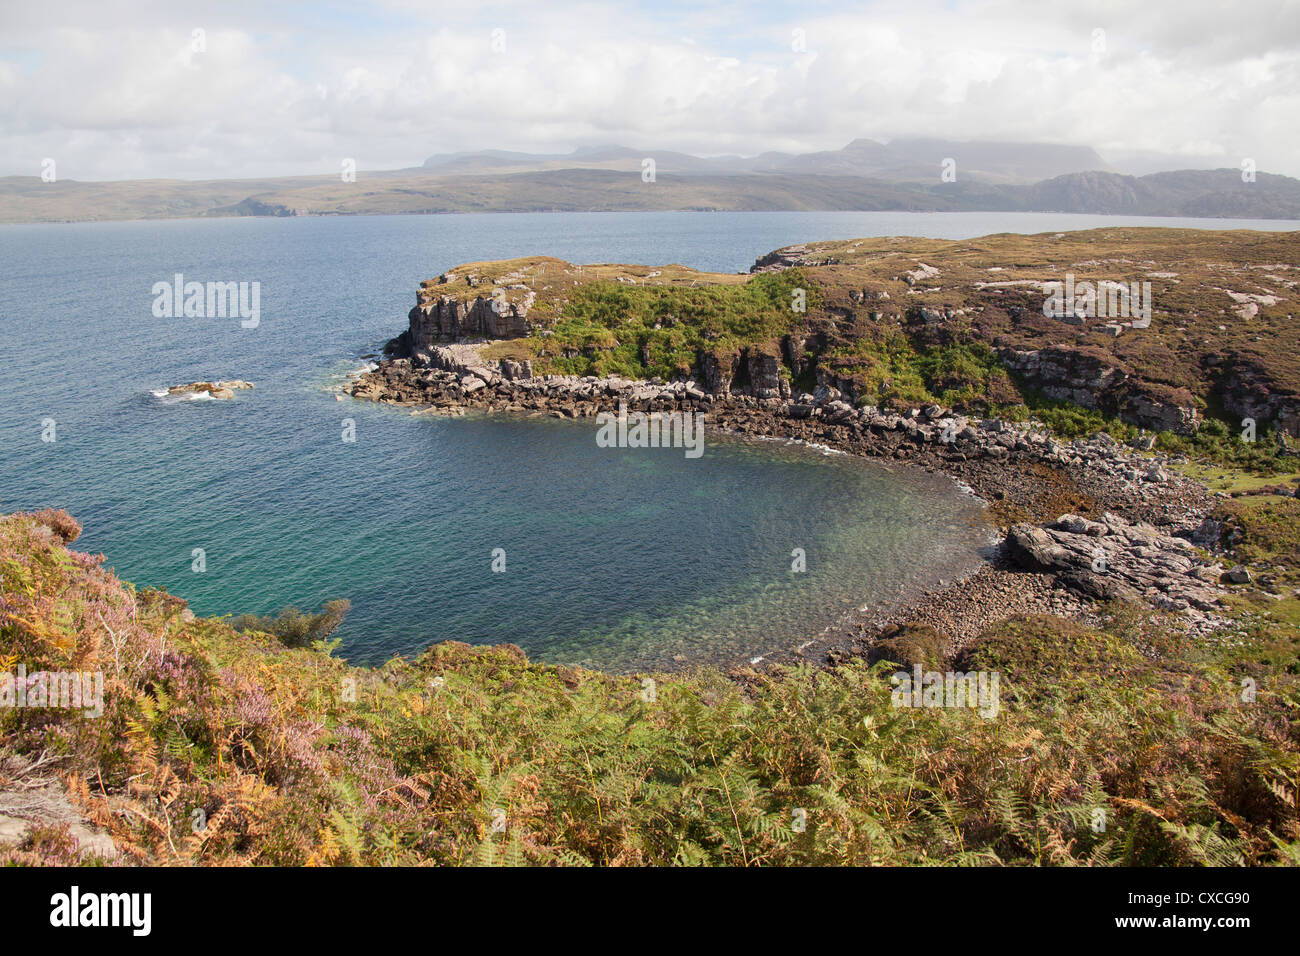 Peninsula of Applecross, Scotland. North coast of the Applecross Peninsula with the sea loch, Loch Torridon in the background. Stock Photo